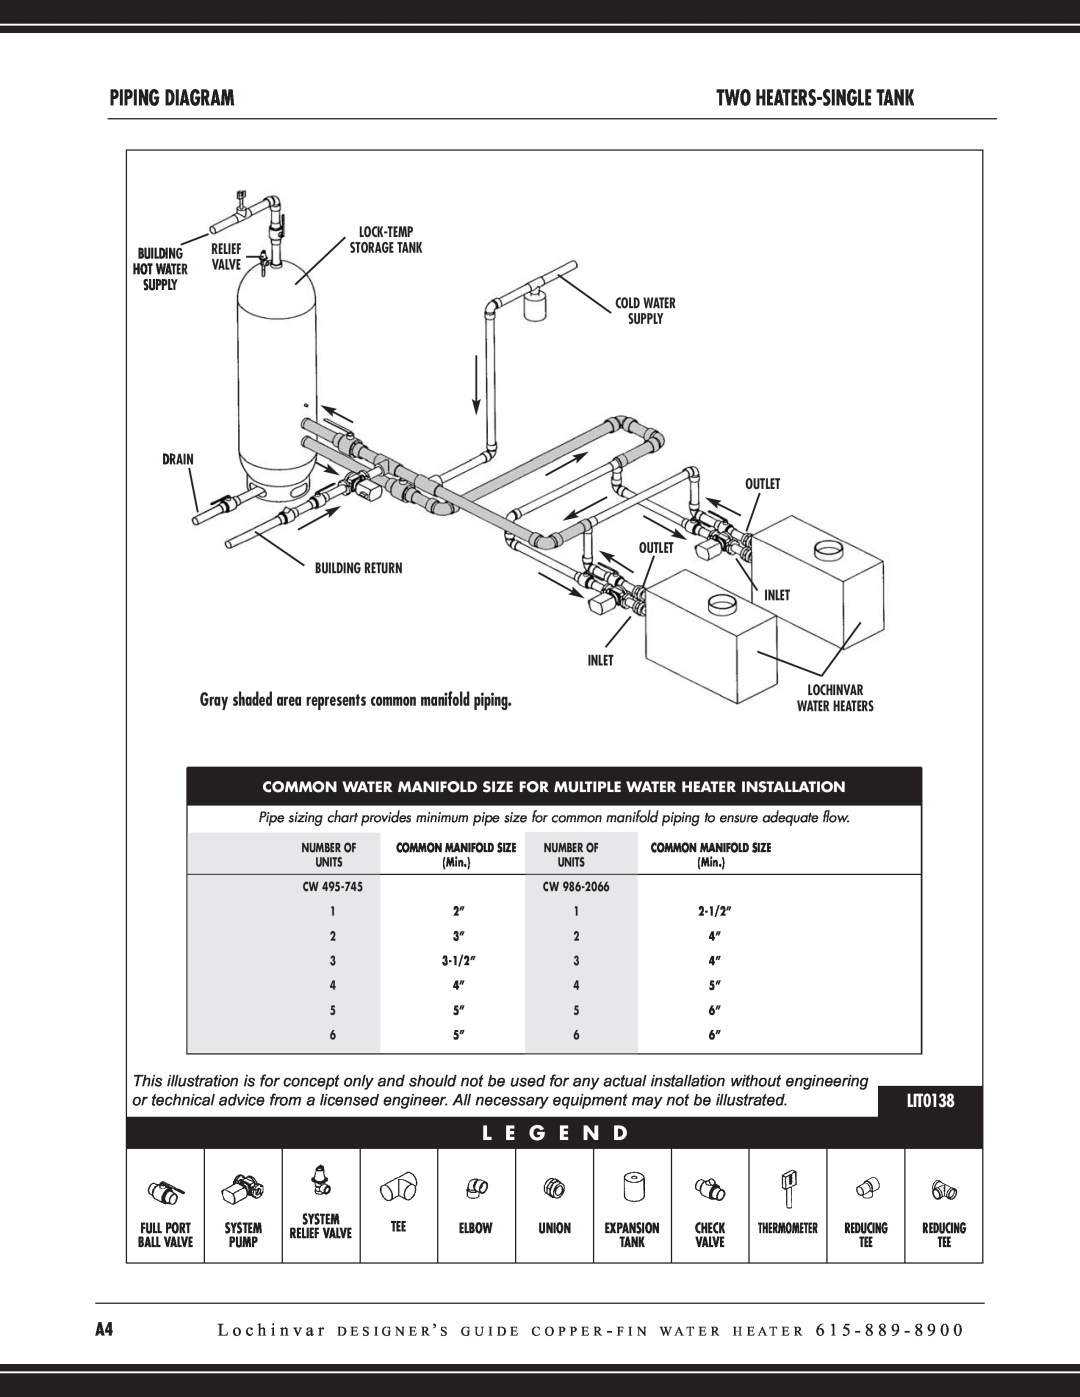 Lochinvar CW 745, CW 645 manual Piping Diagram, L E G E N D, Two Heaters-Singletank, LIT0138 